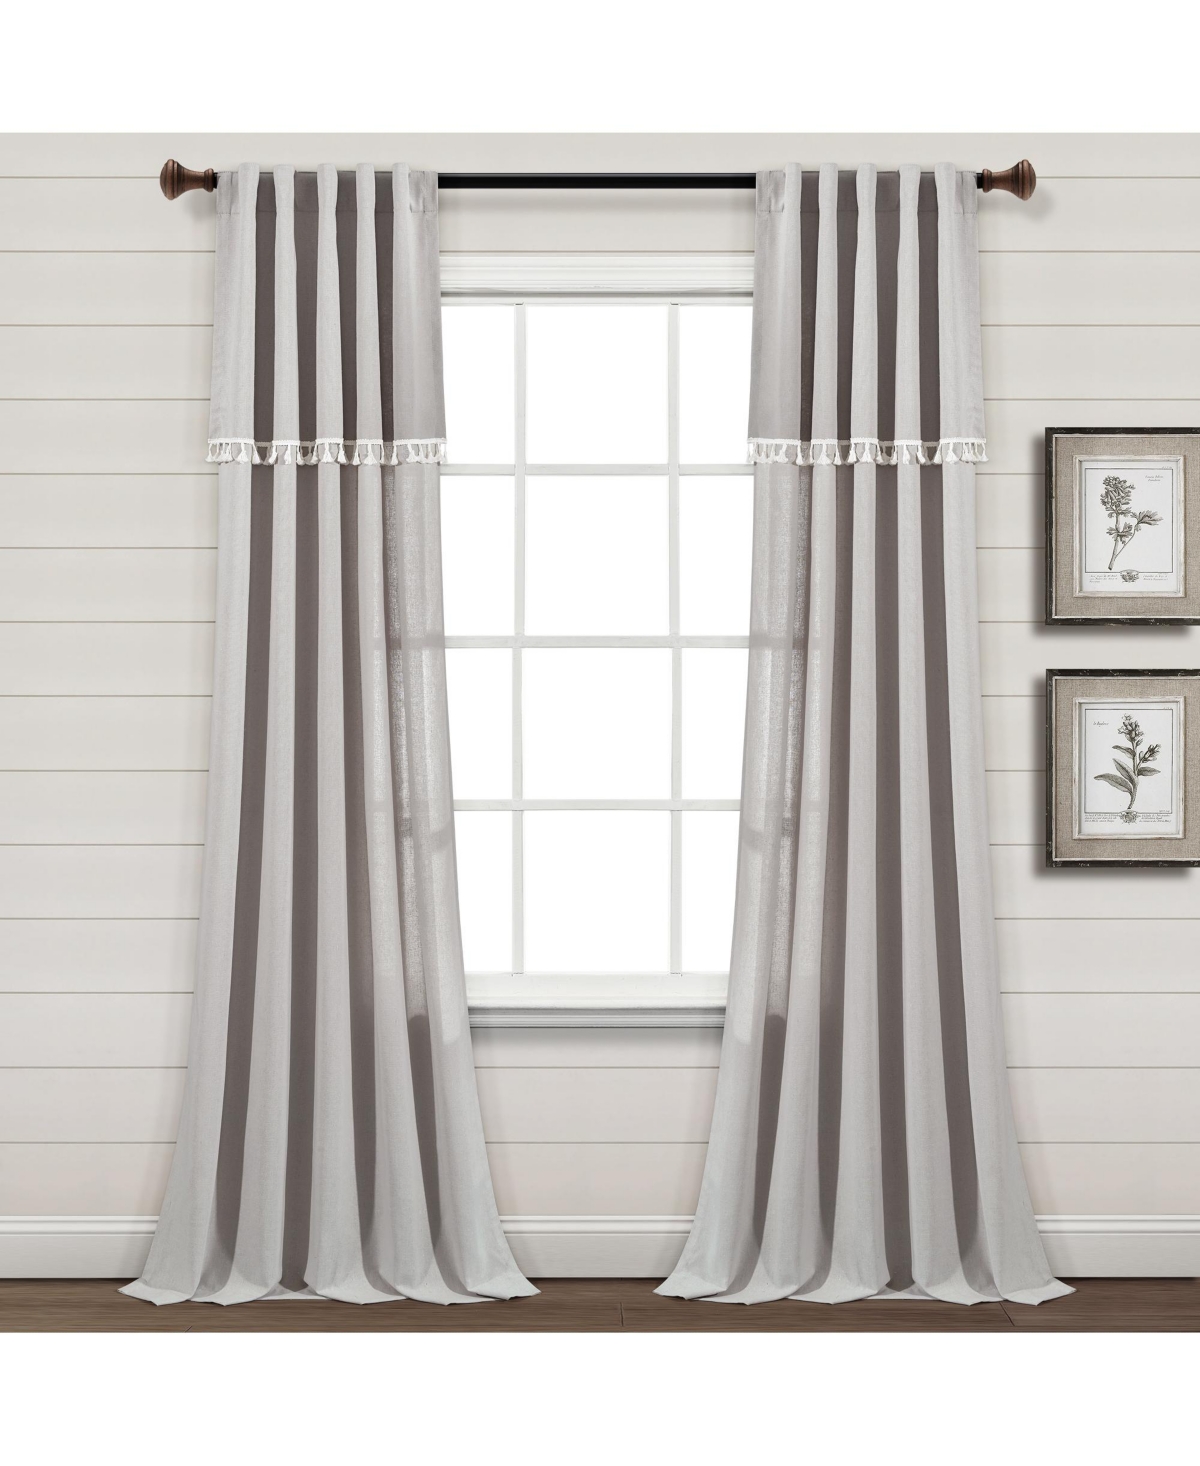 Ivy Tassel Faux Linen Window Curtain Panels - Light gray